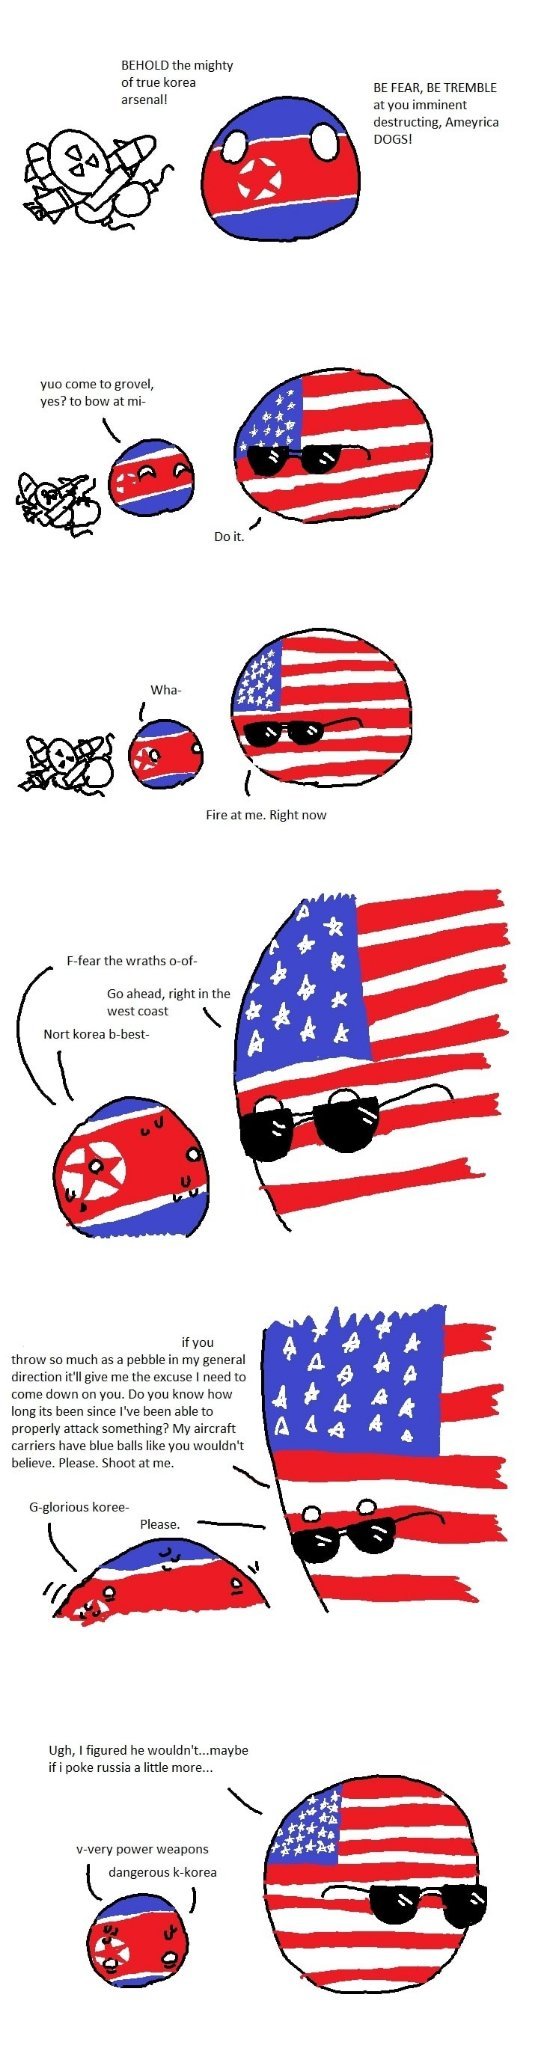 North Korea is so fucking trash - meme